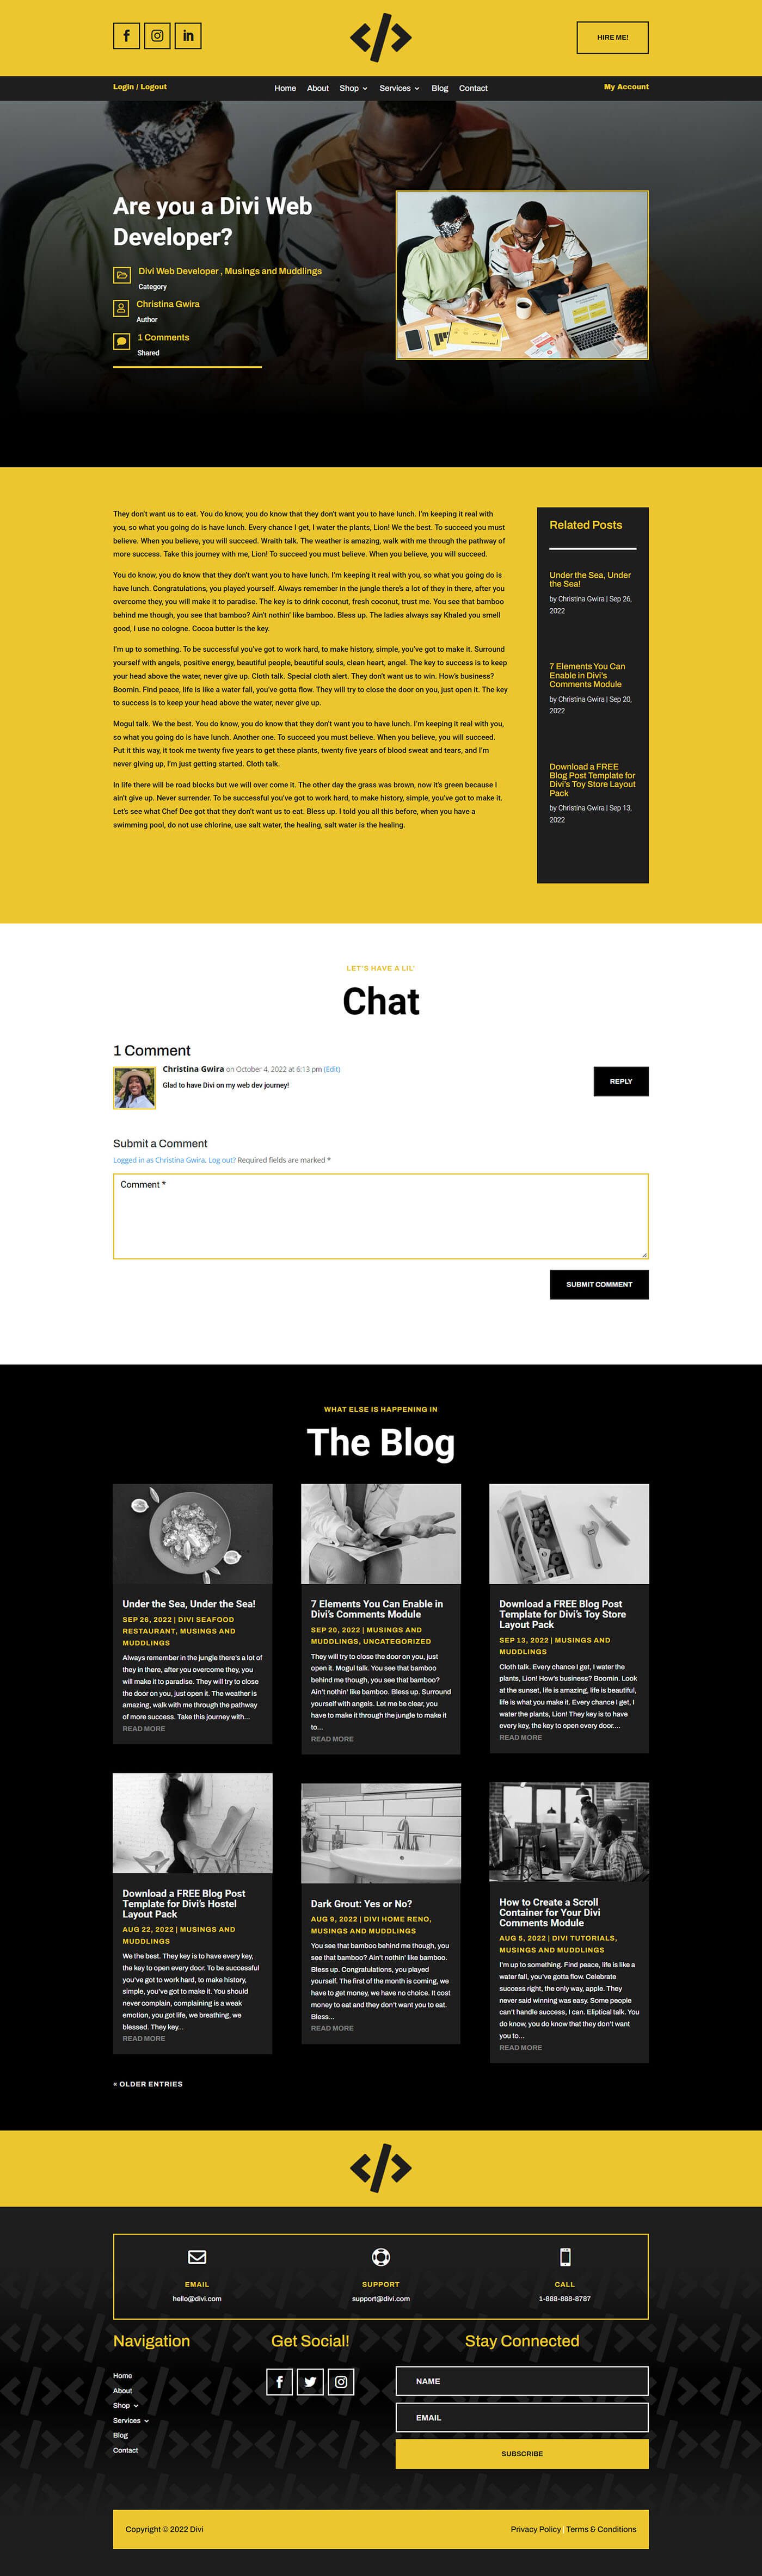 Desktop View of the Divi Web Developer Blog Template